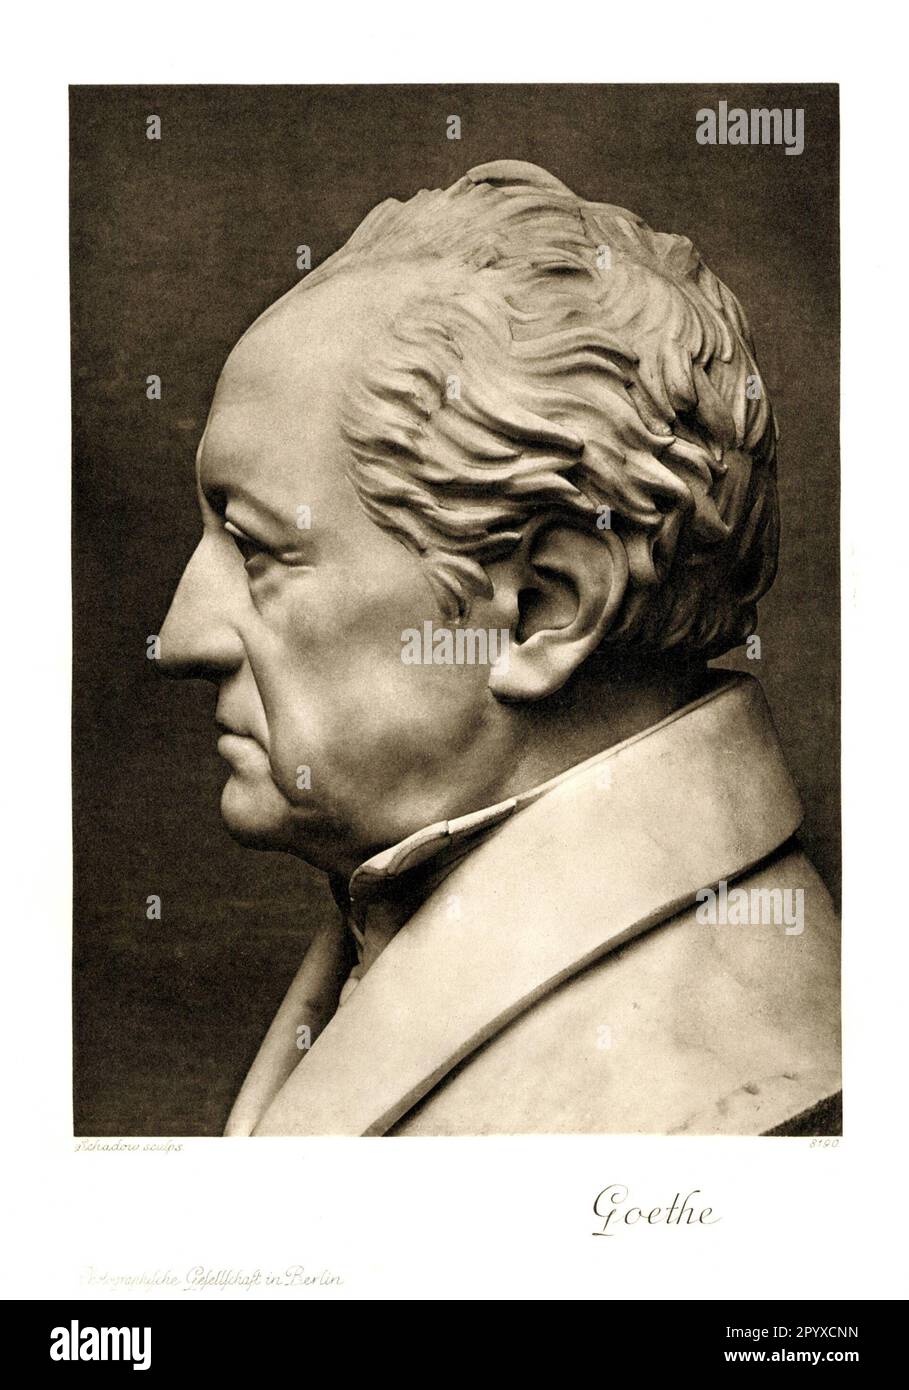 Johann Wolfgang von Goethe (1749-1832), poeta tedesco. Busto di Johann Gottfried Schadow. Foto: Heliogravure, Corpus Imaginum, Hanfstaengl Collection. [traduzione automatica] Foto Stock